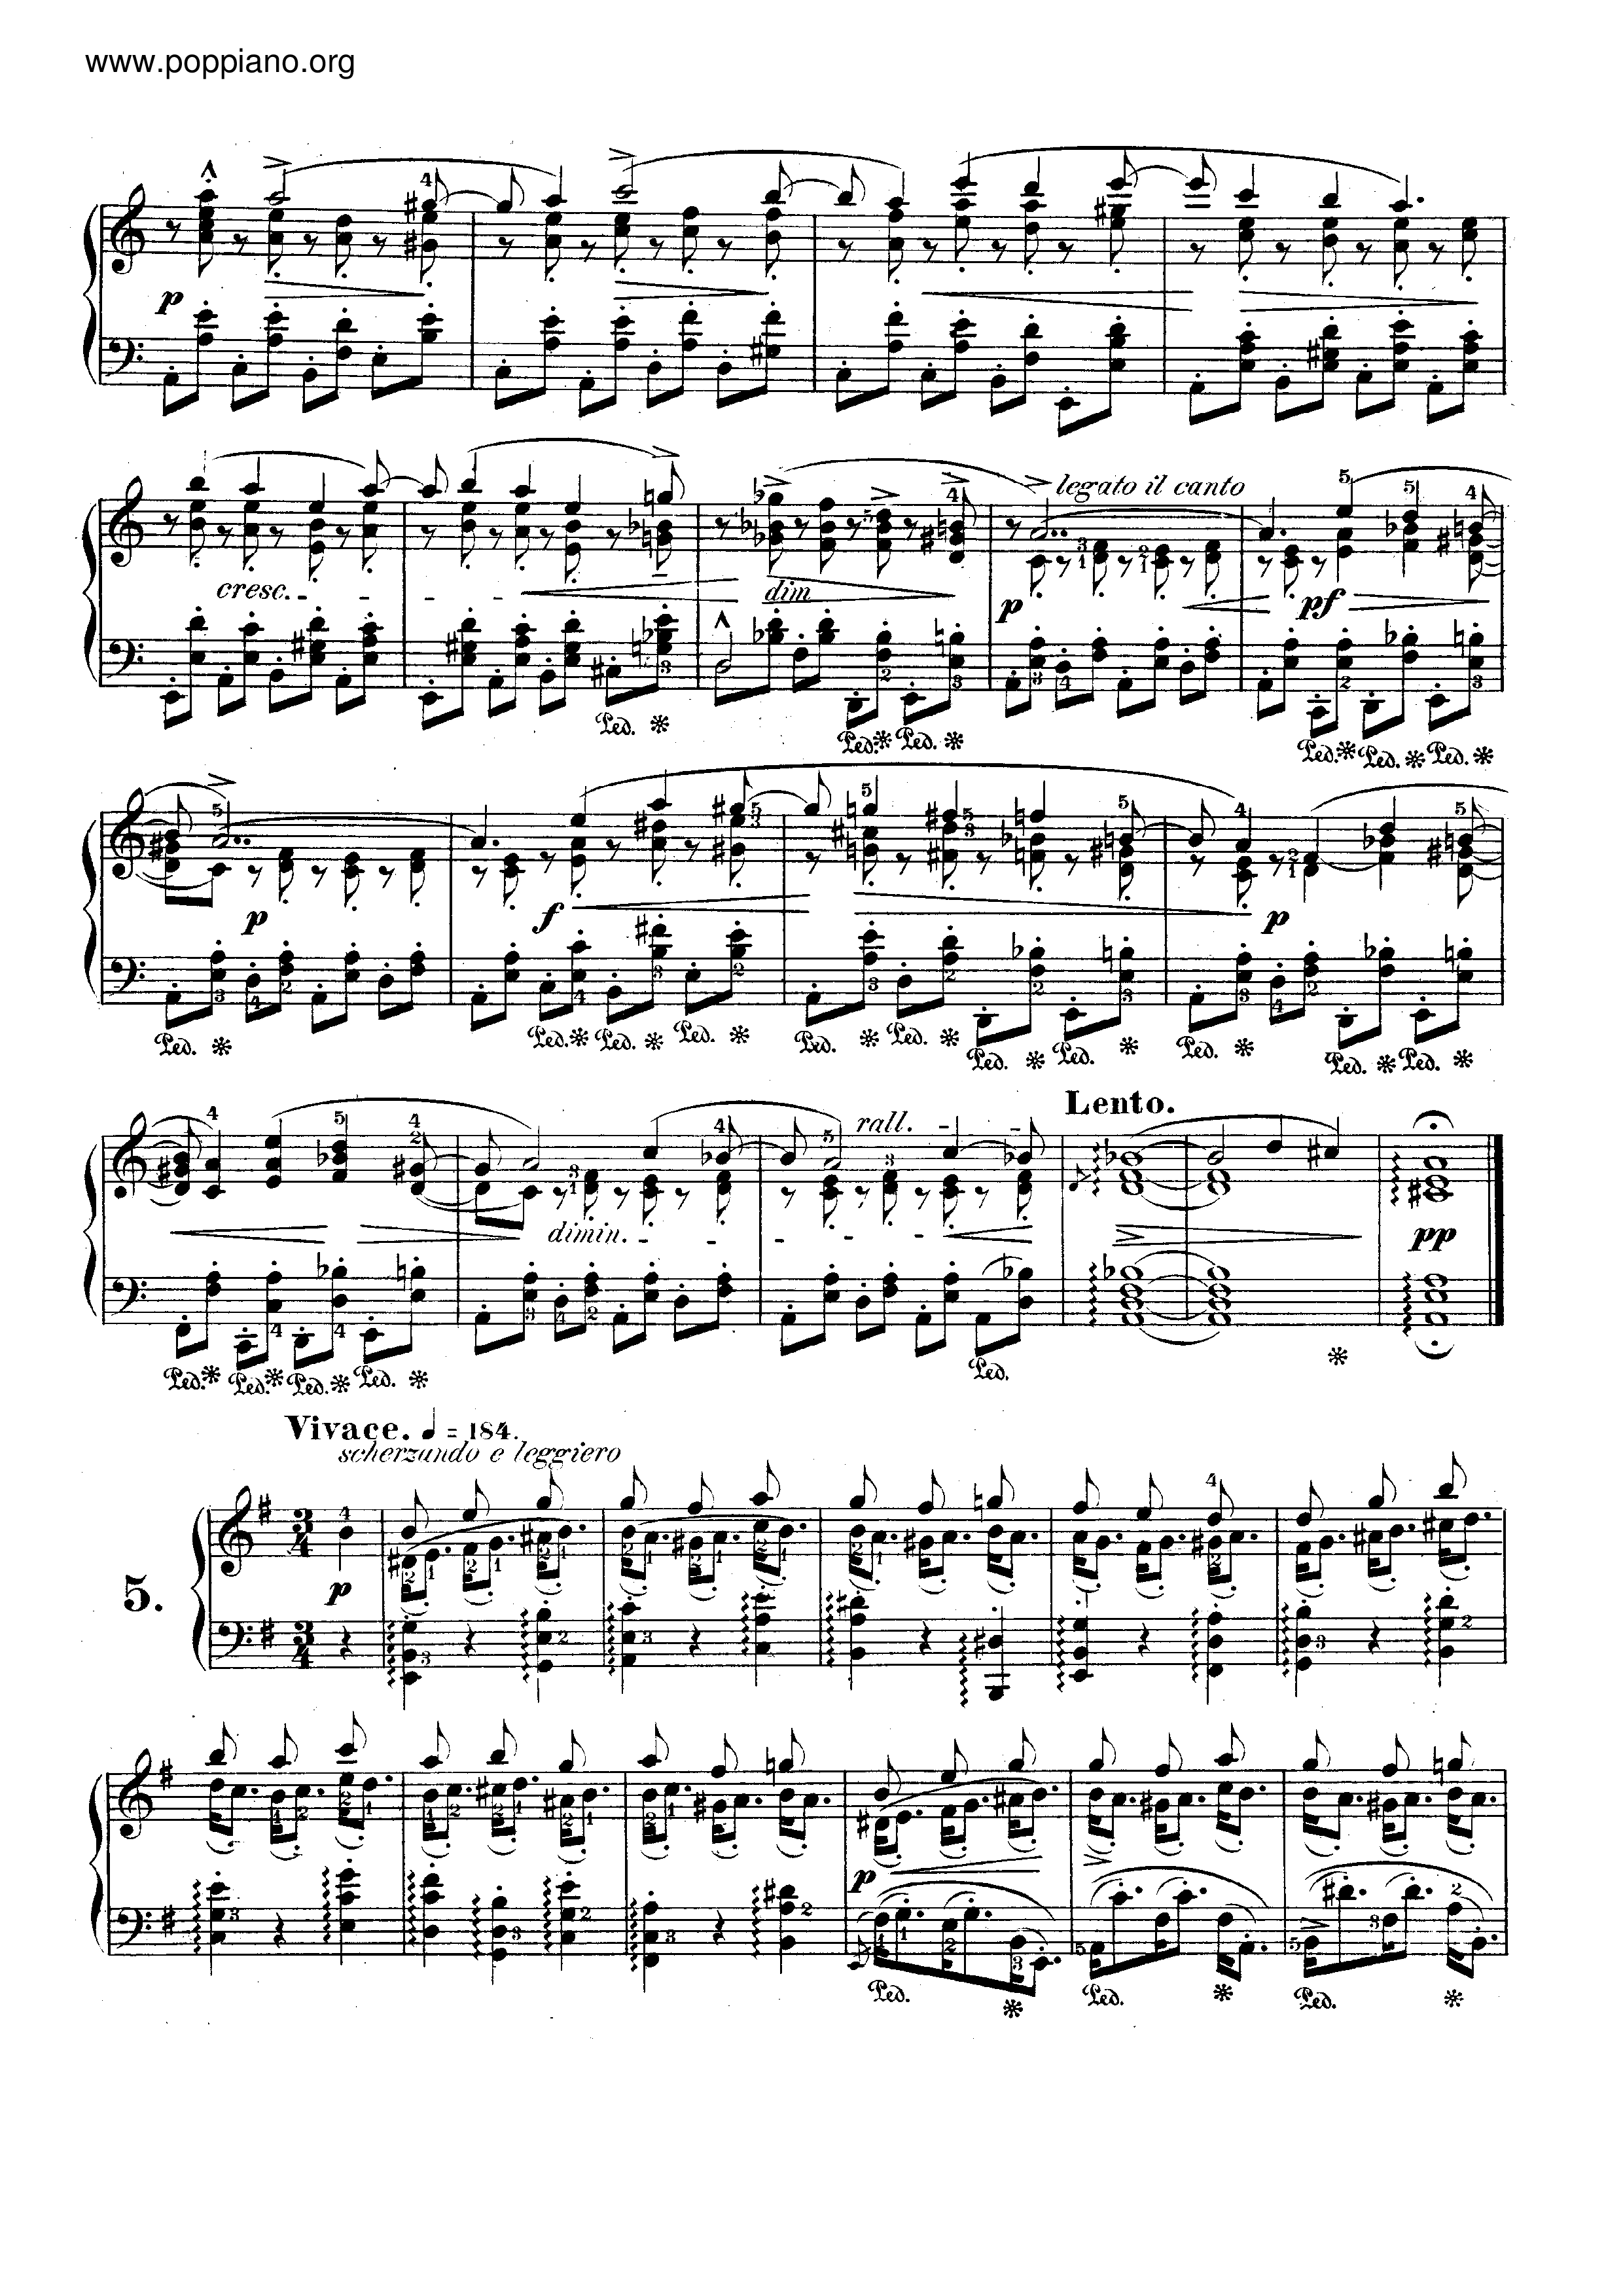 Chopin: Etude Ho Short Score